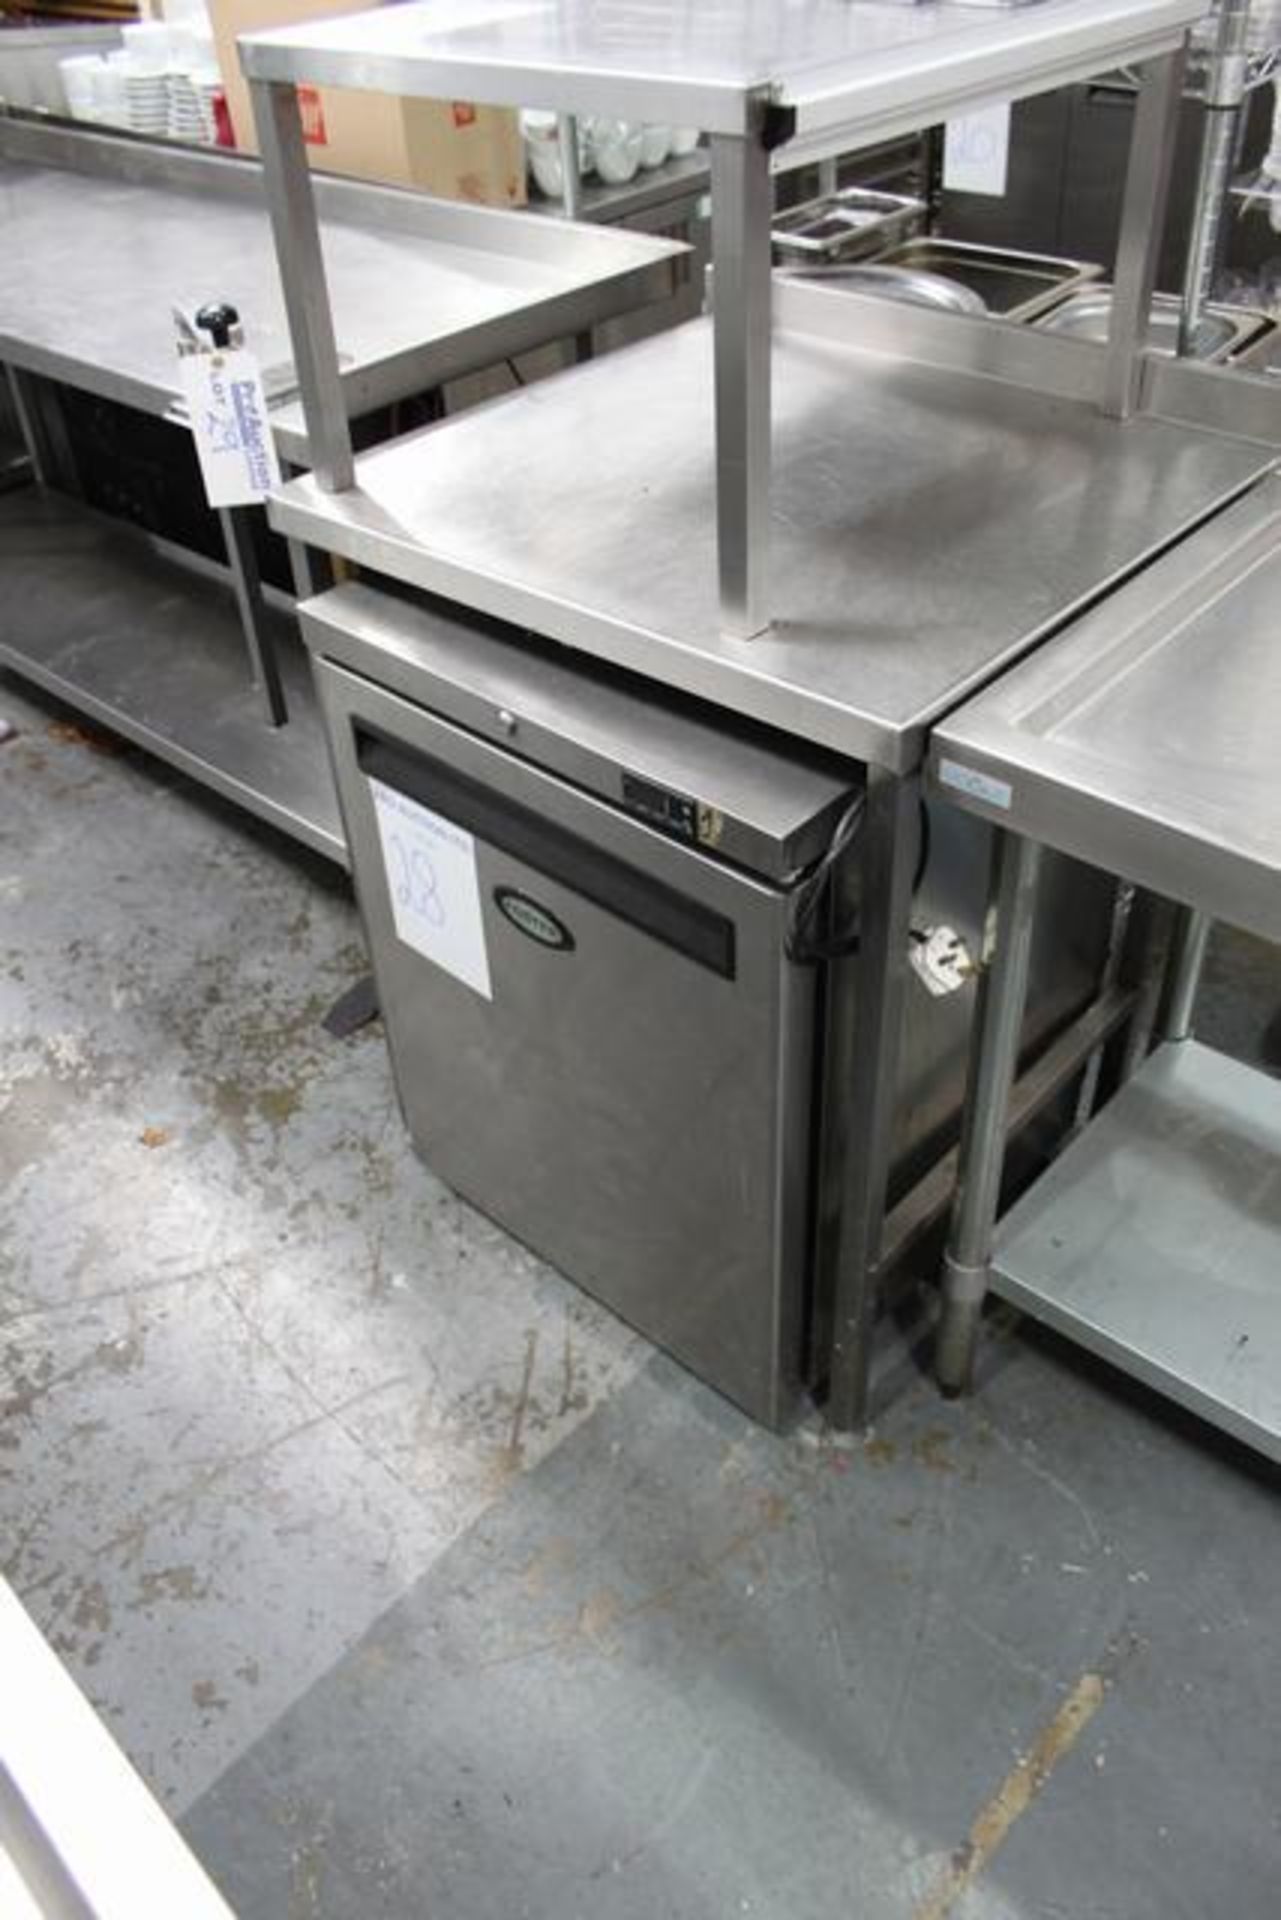 Foster LR150 under counter freezer temperature range -18°C to -21°C 150 litre capacity 605mm x 620mm